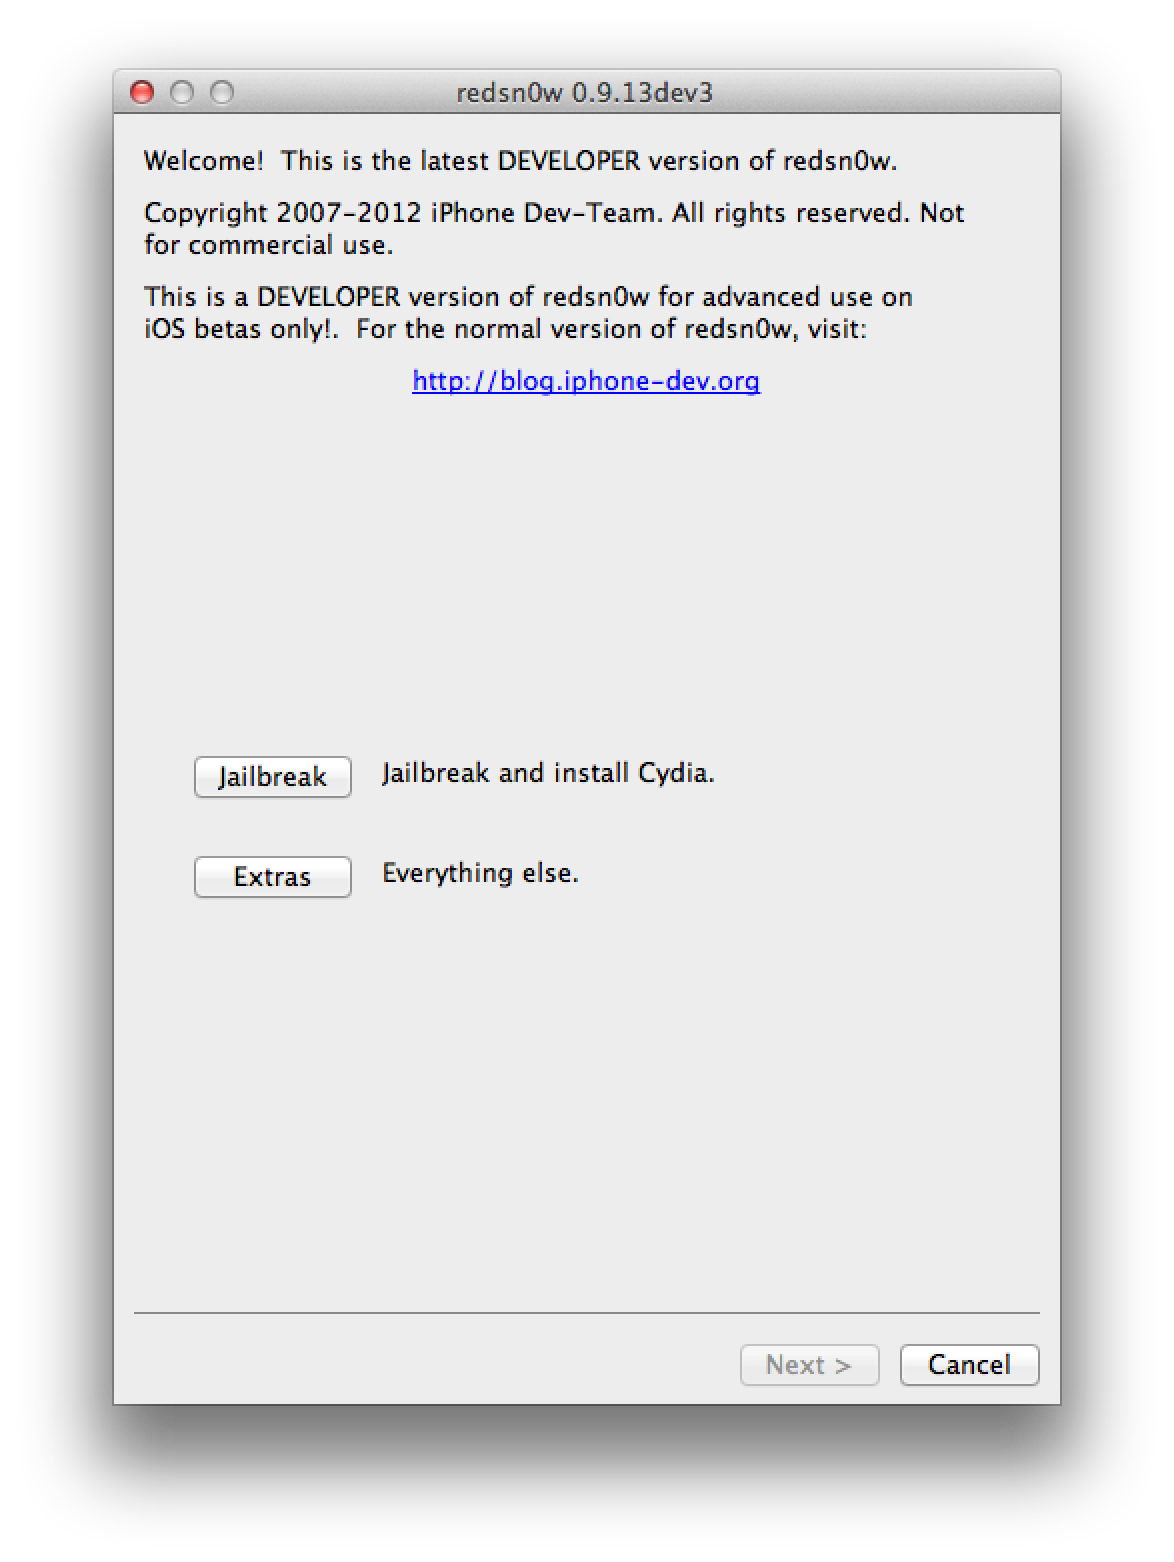 RedSn0w 0.9.13dev3 Can Still Jailbreak iOS 6 Beta 4